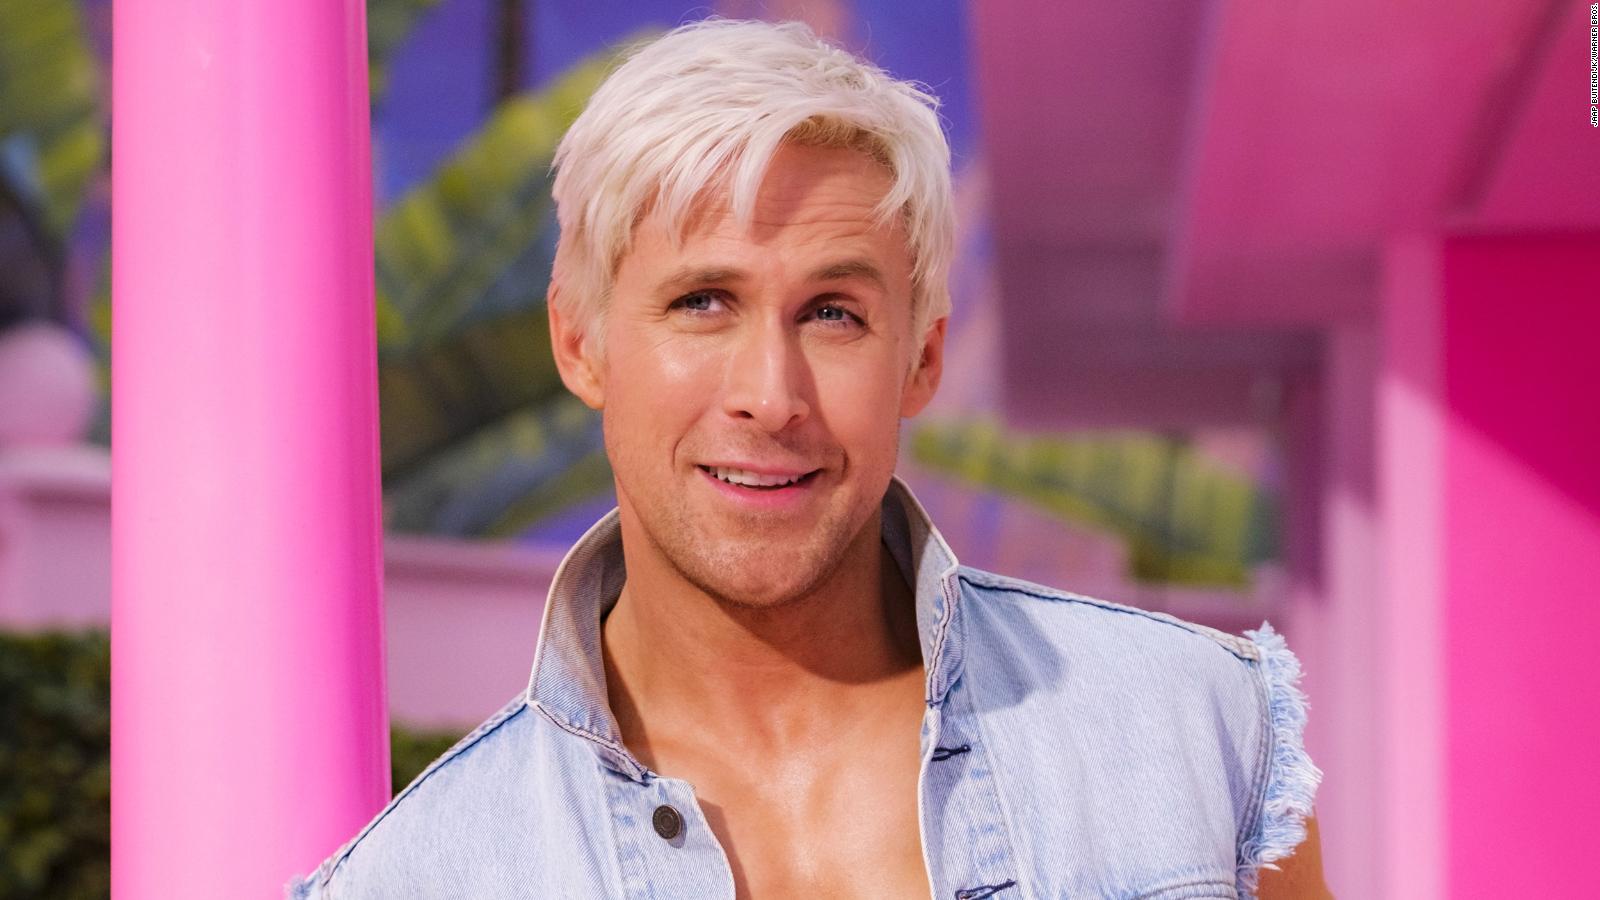 'Barbie': Ryan Gosling's Ken revealed in new photo - CNN